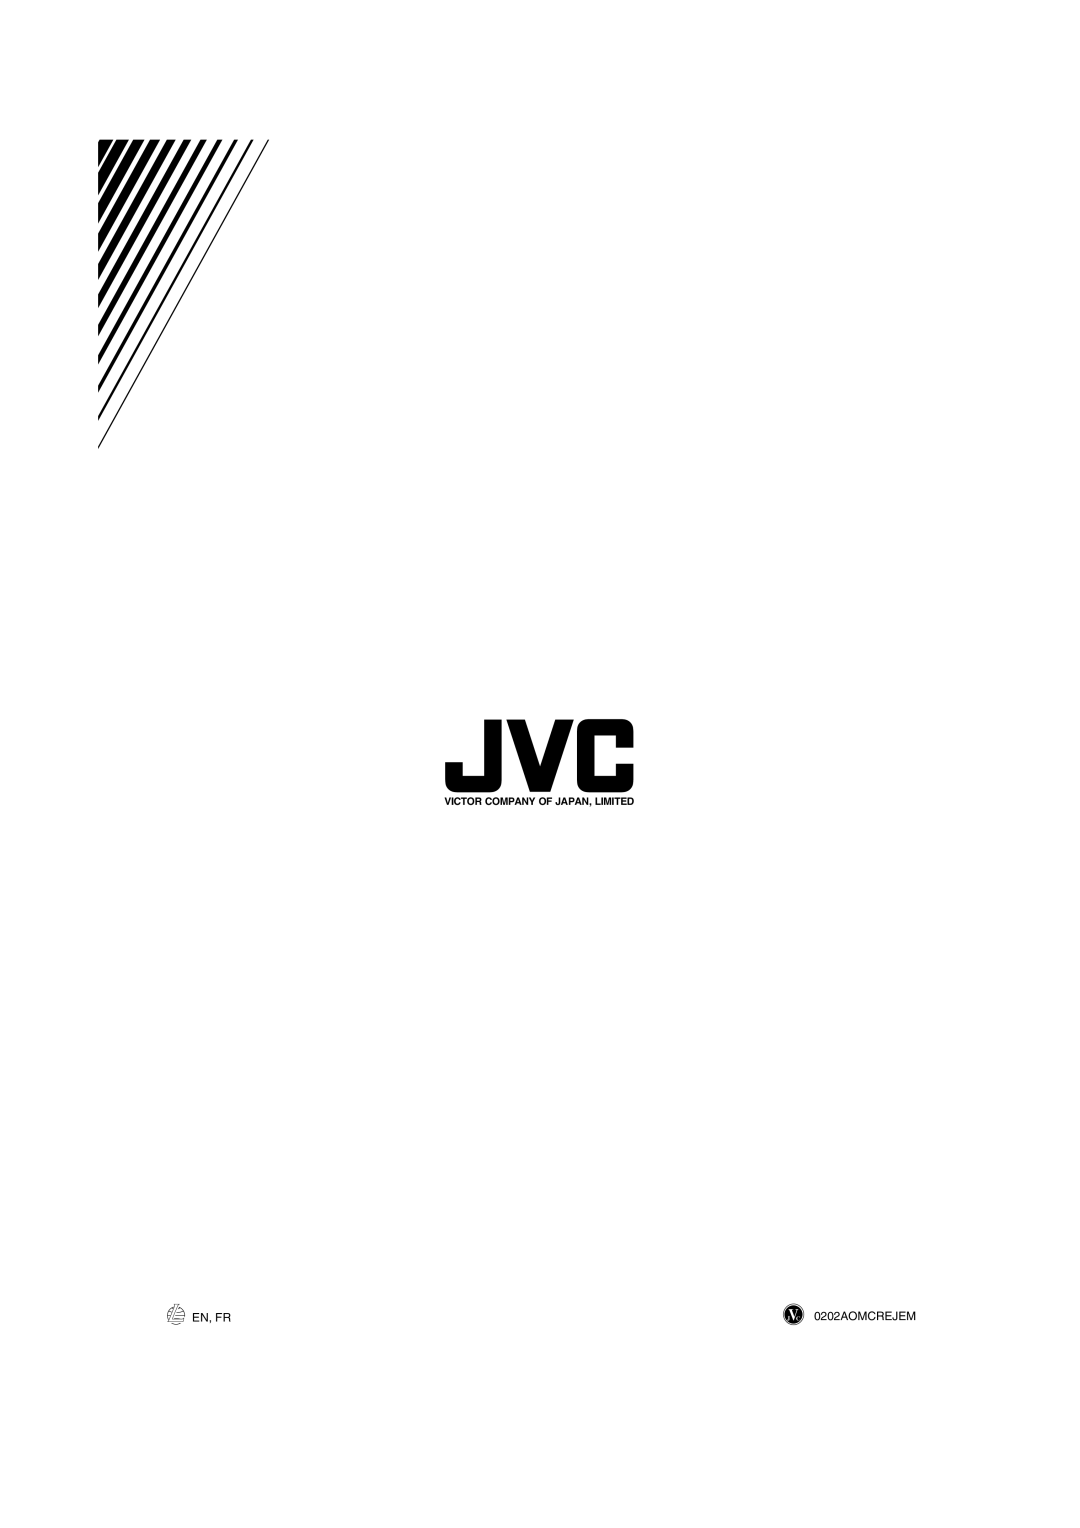 JVC XL-FZ700 manual En, Fr, JVC 0202AOMCREJEM, Victor Company Of Japan, Limited 